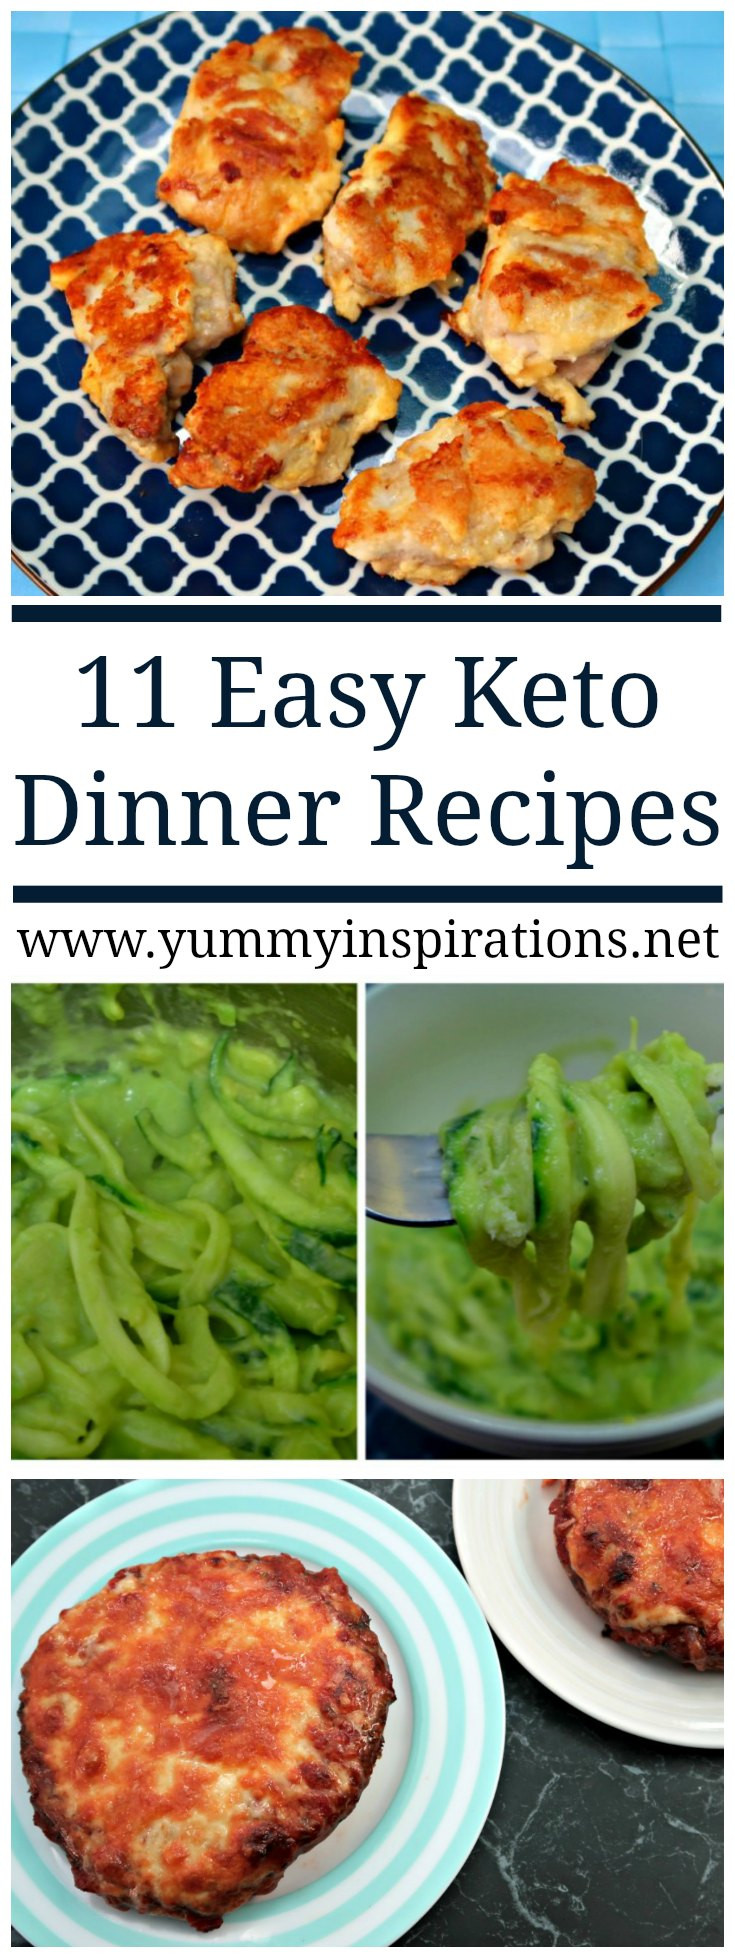 Keto Dinner Recipes Low Carb Diets
 11 Easy Keto Dinner Recipes Quick Low Carb Ketogenic